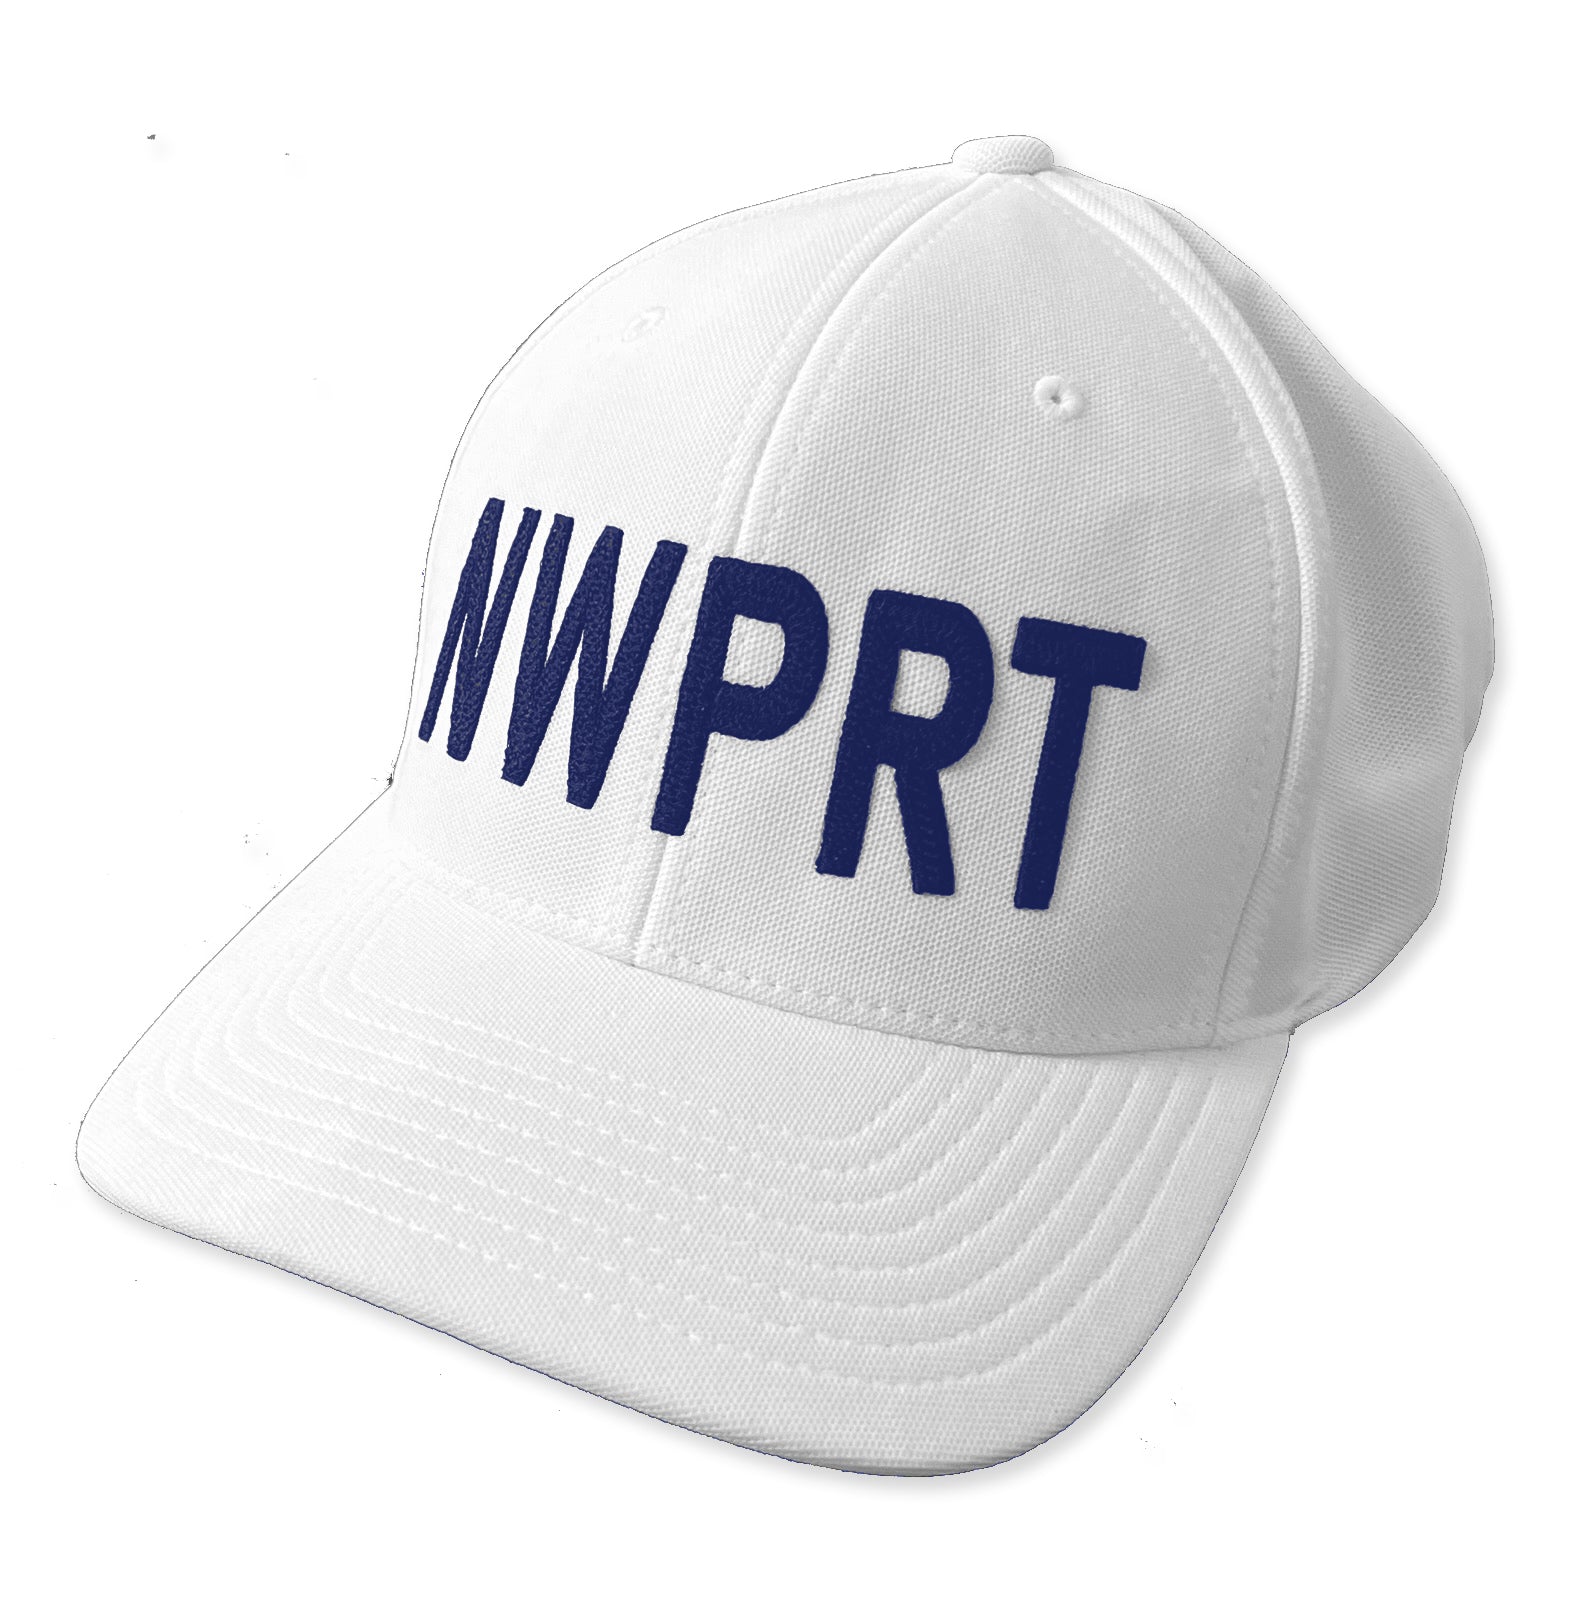 NWPRT Vintage Chain Stitch logo hat